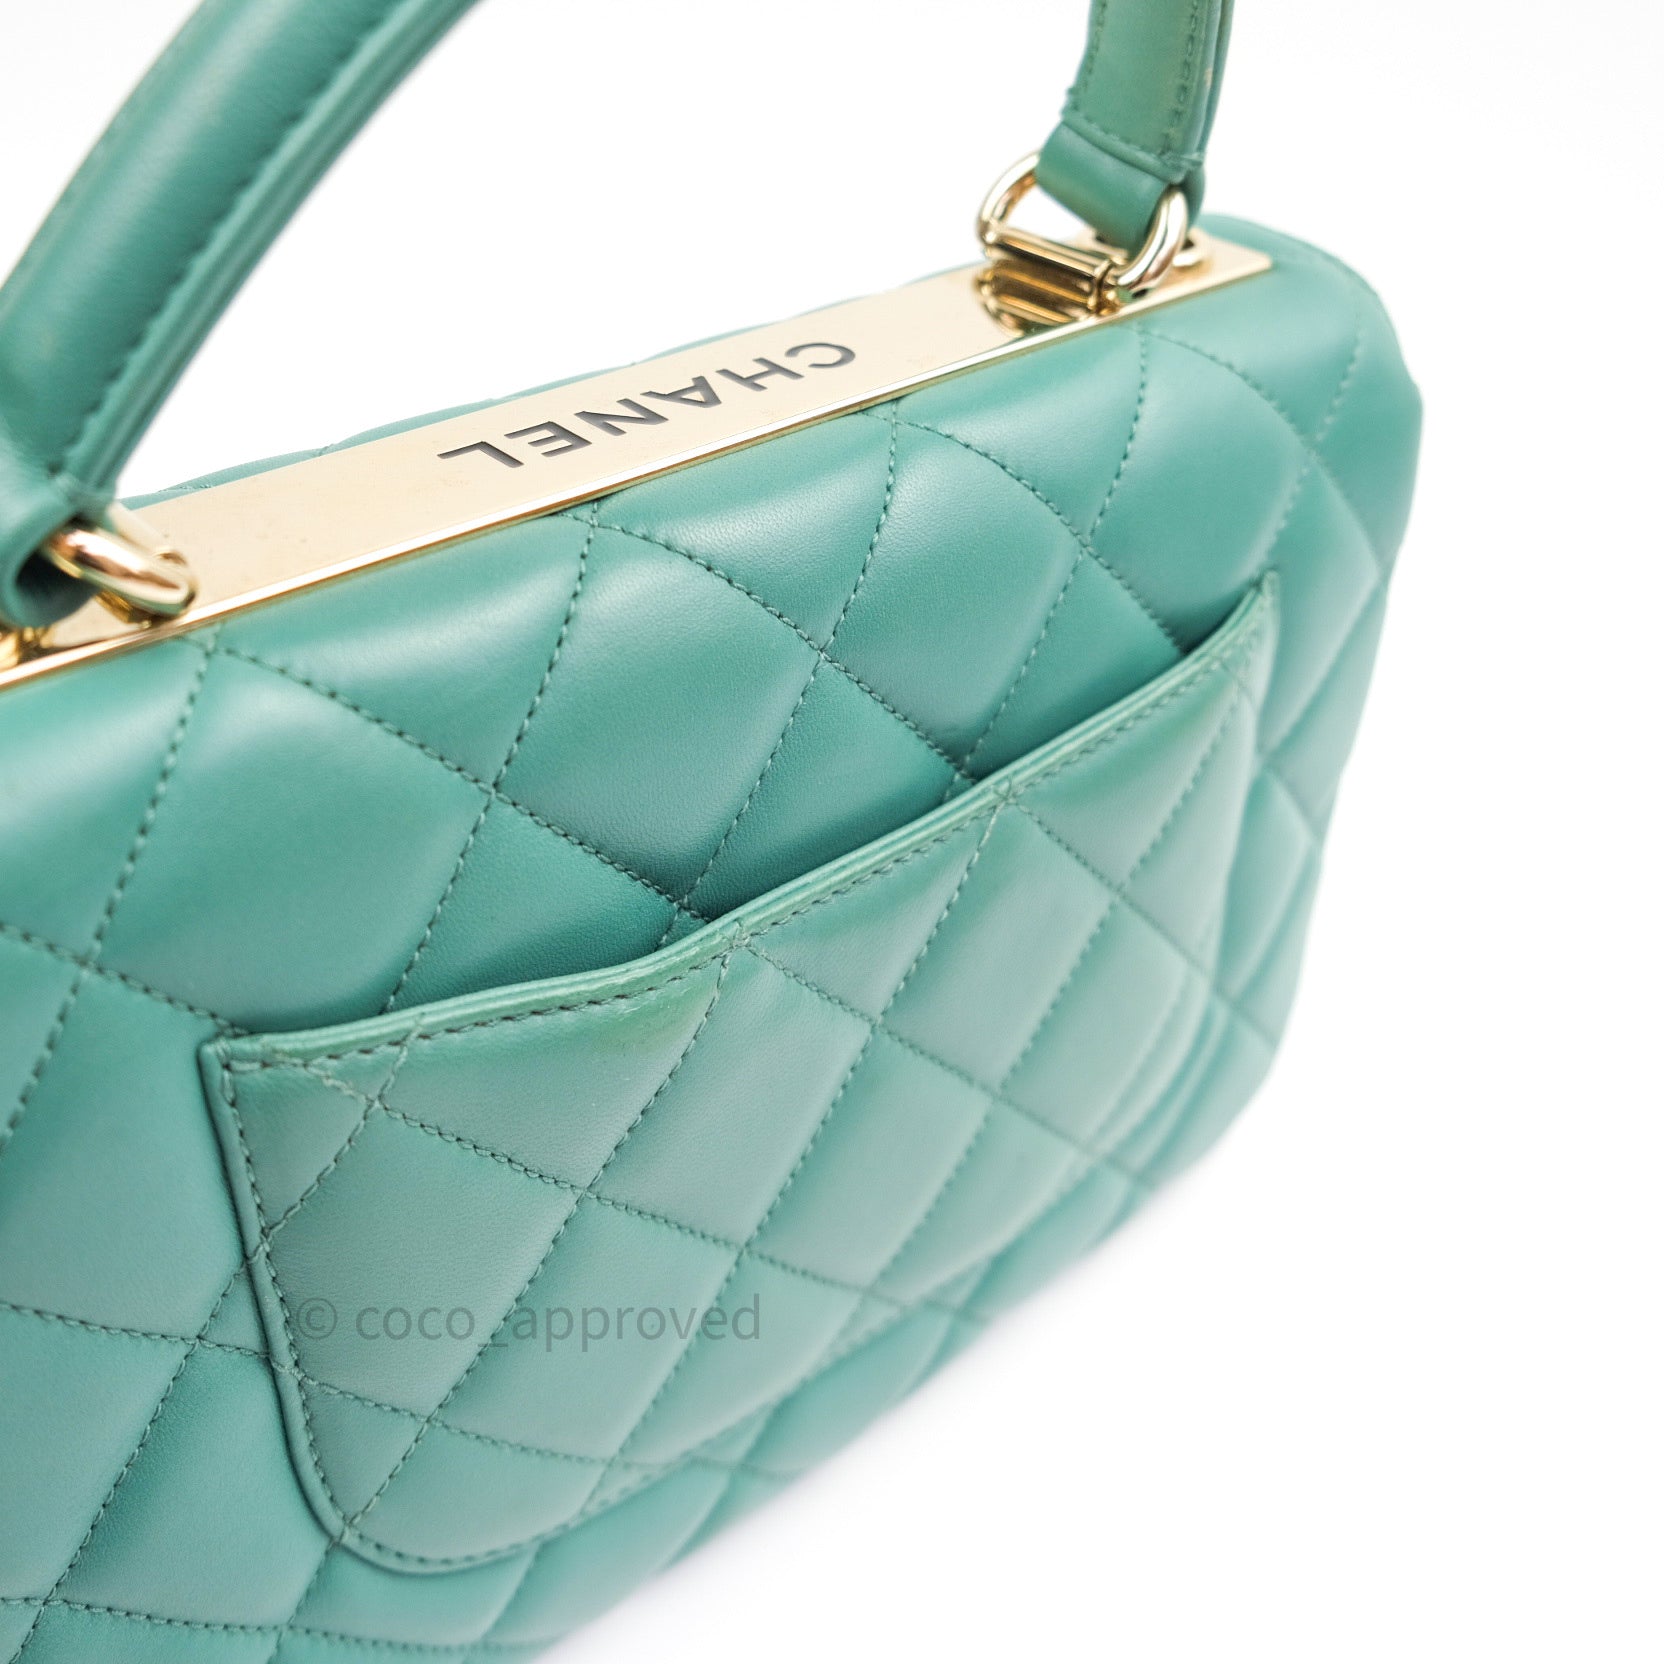 Chanel Trendy CC Top Handle Shoulder Bag COMPLETE 22B - MINT CONDITION